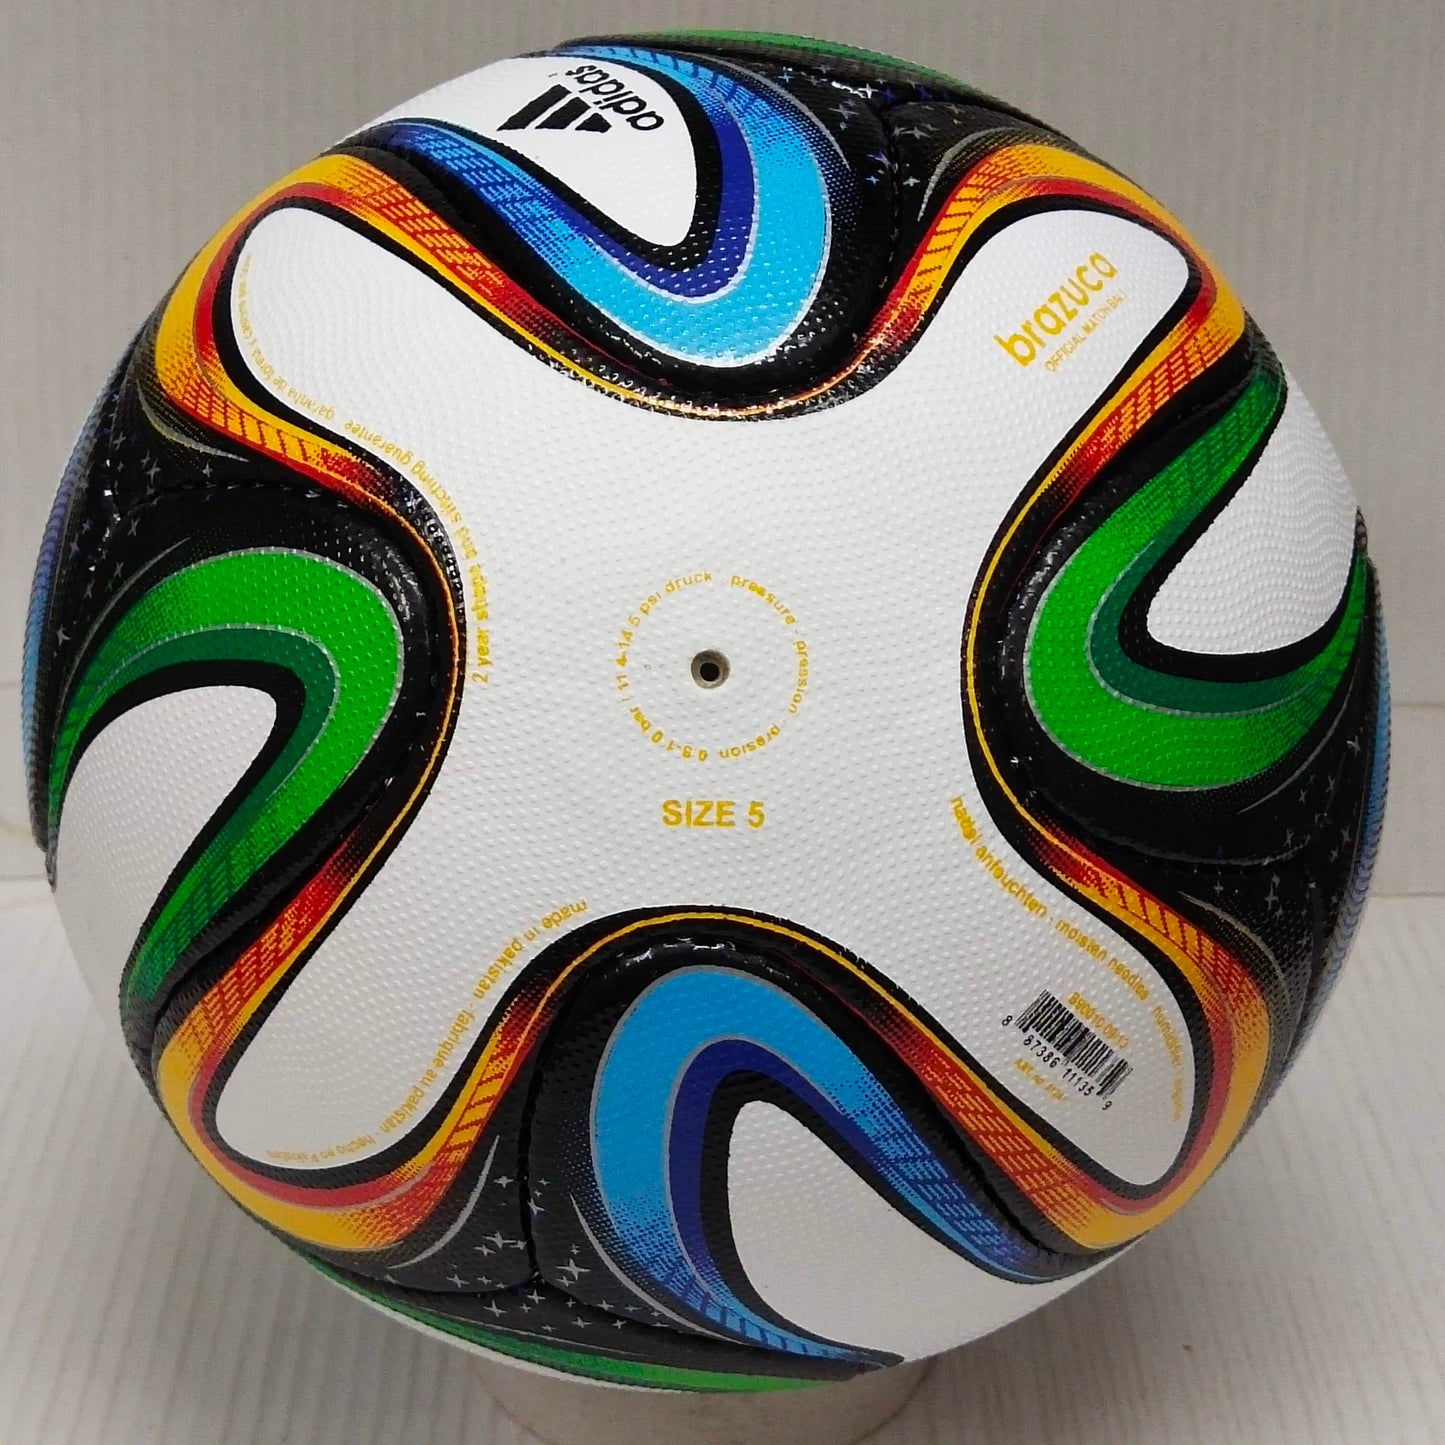 Adidas Brazuca | Match Ball | 2014 | FIFA World Cup Ball | SIZE 5 03